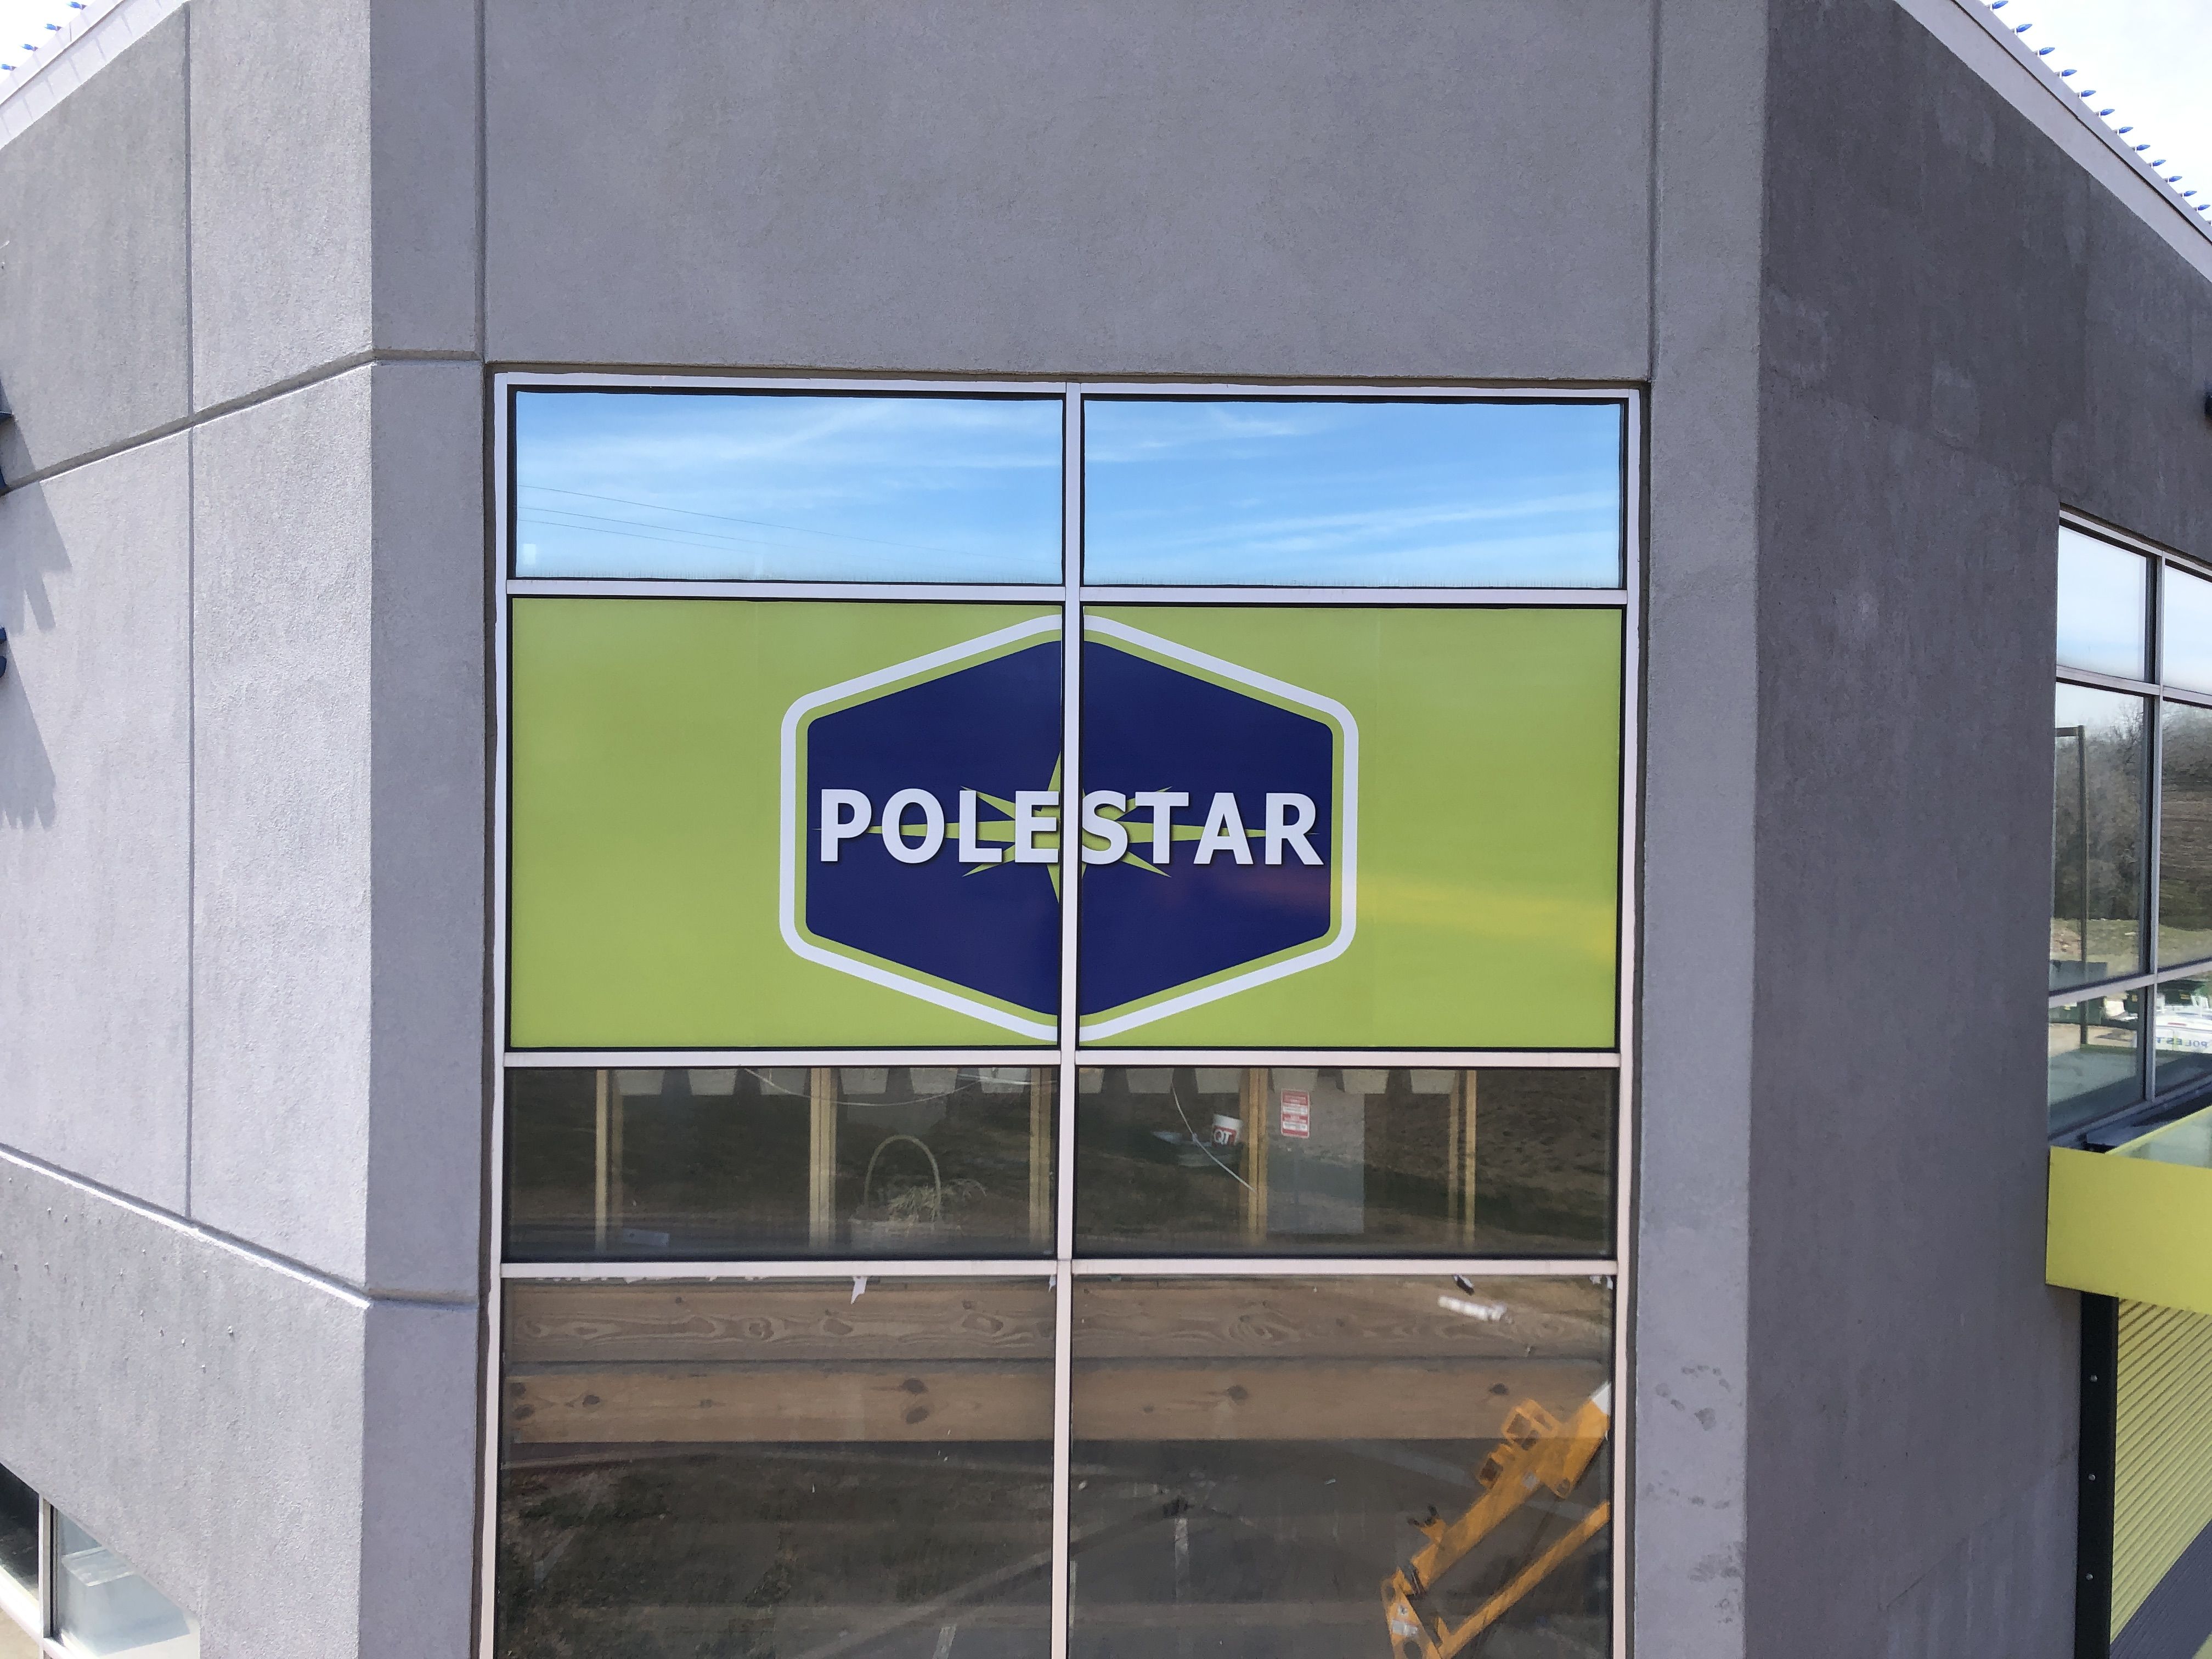 Perforated Window Vinyl Graphics for Upper Floor of Polestar Location in Merriam, Kansas